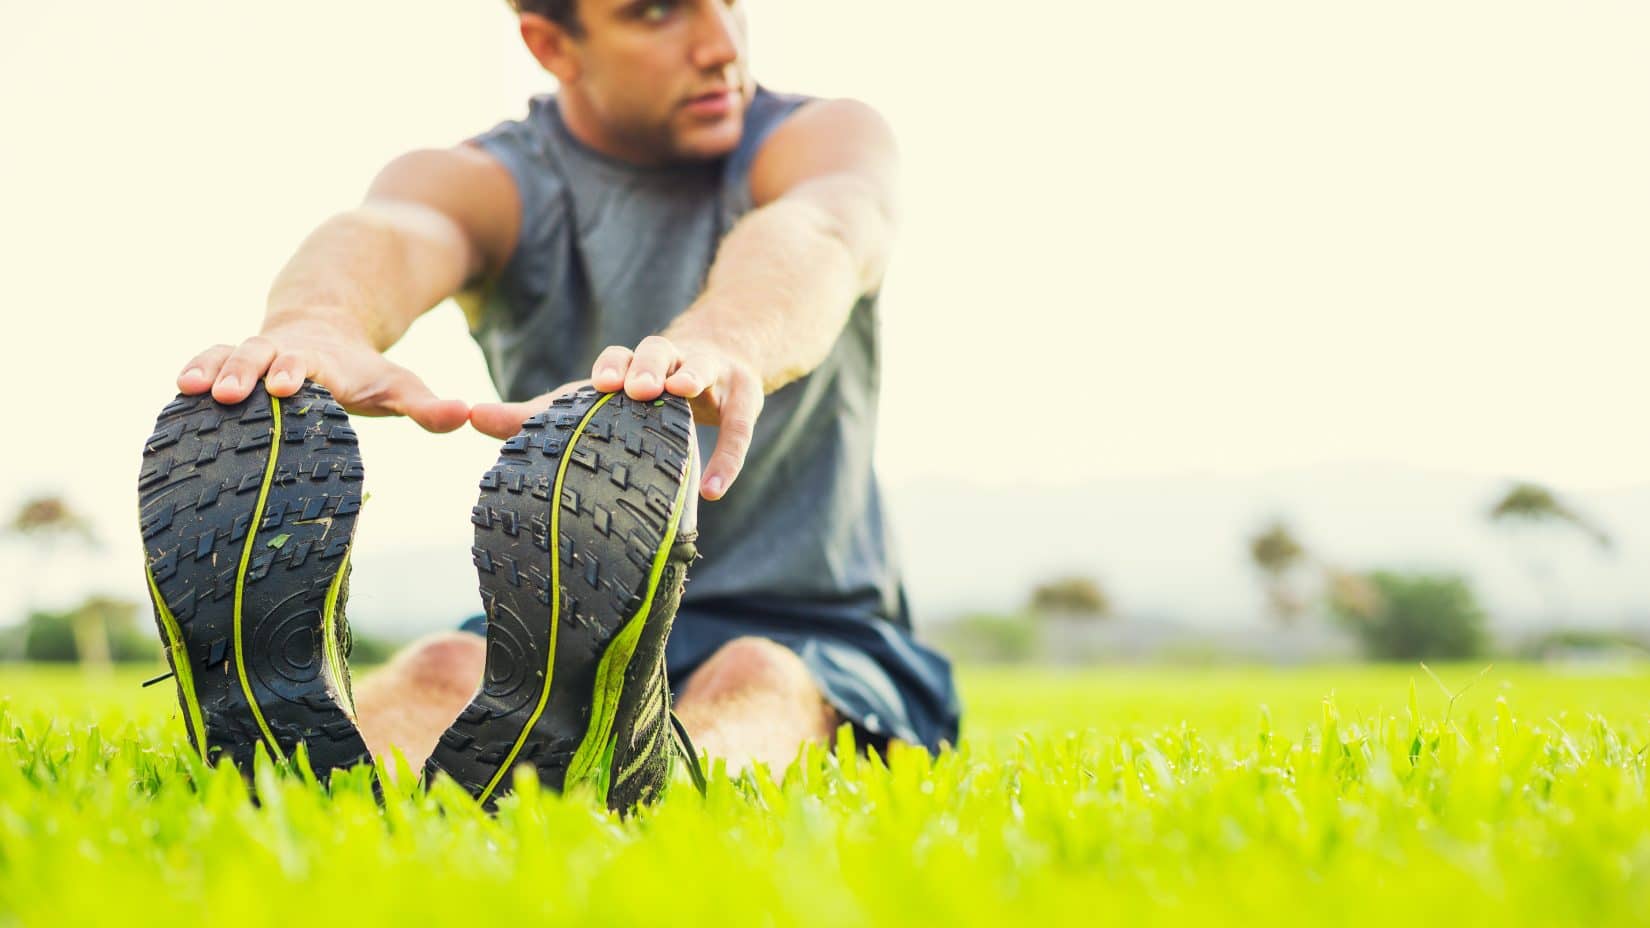 Man in running gear stretching on grass